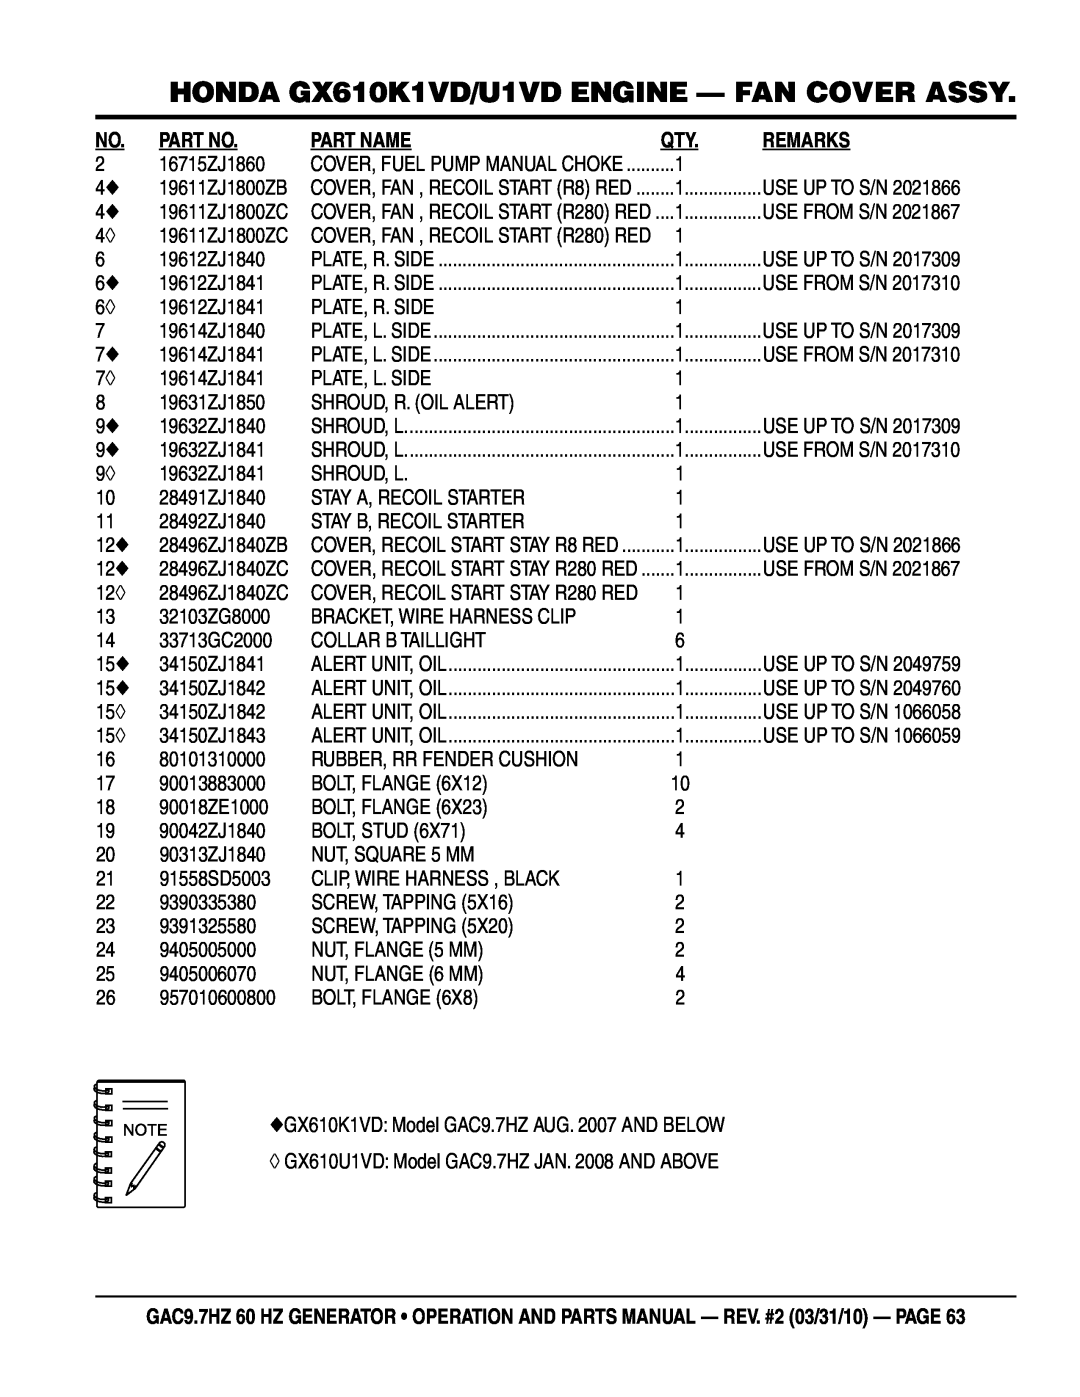 Multiquip GAC-9.7HZ manual HONDA GX610K1VD/U1VD ENGINE - FAN COVER ASSY, Part Name, Remarks 